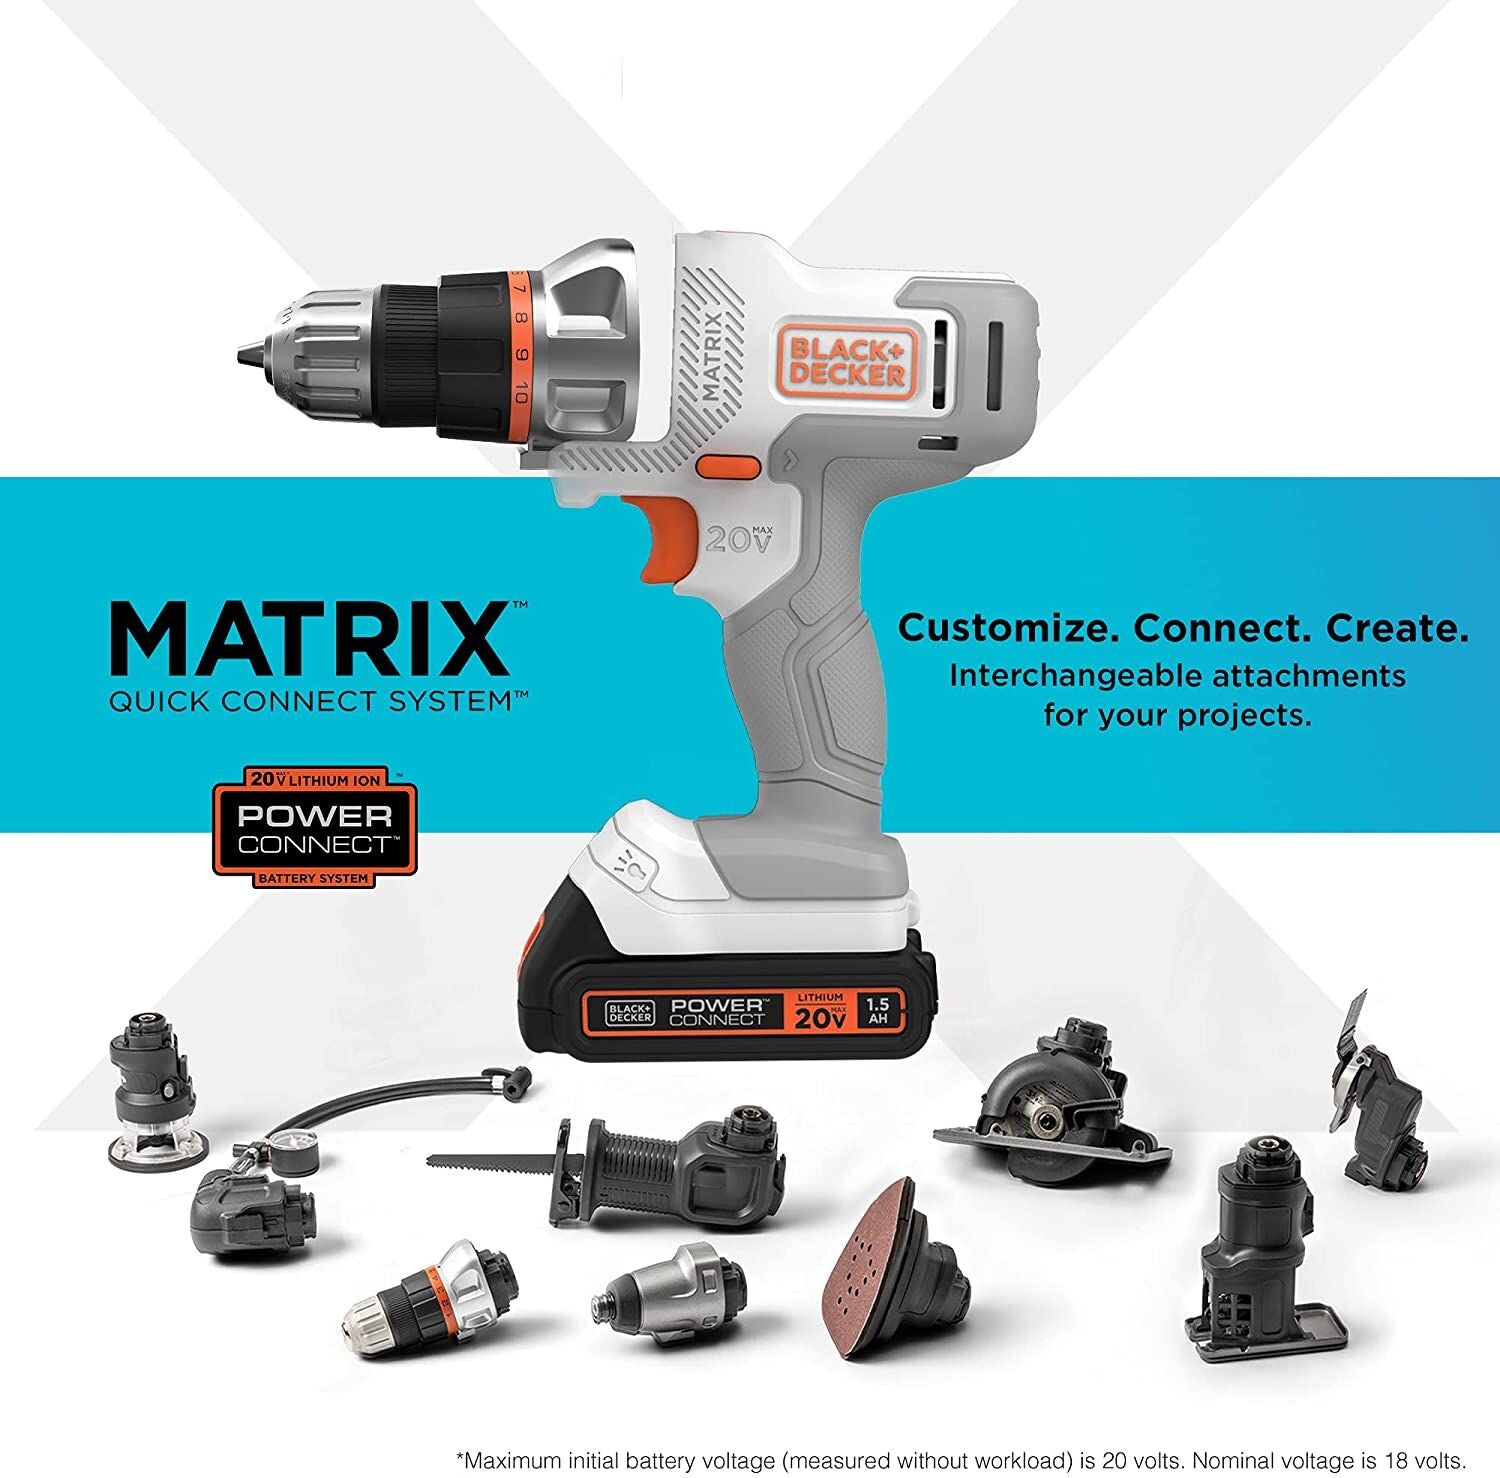 BLACK+DECKER 20V MAX Matrix Cordless Drill/Driver Kit BDCDMT120WC1FF